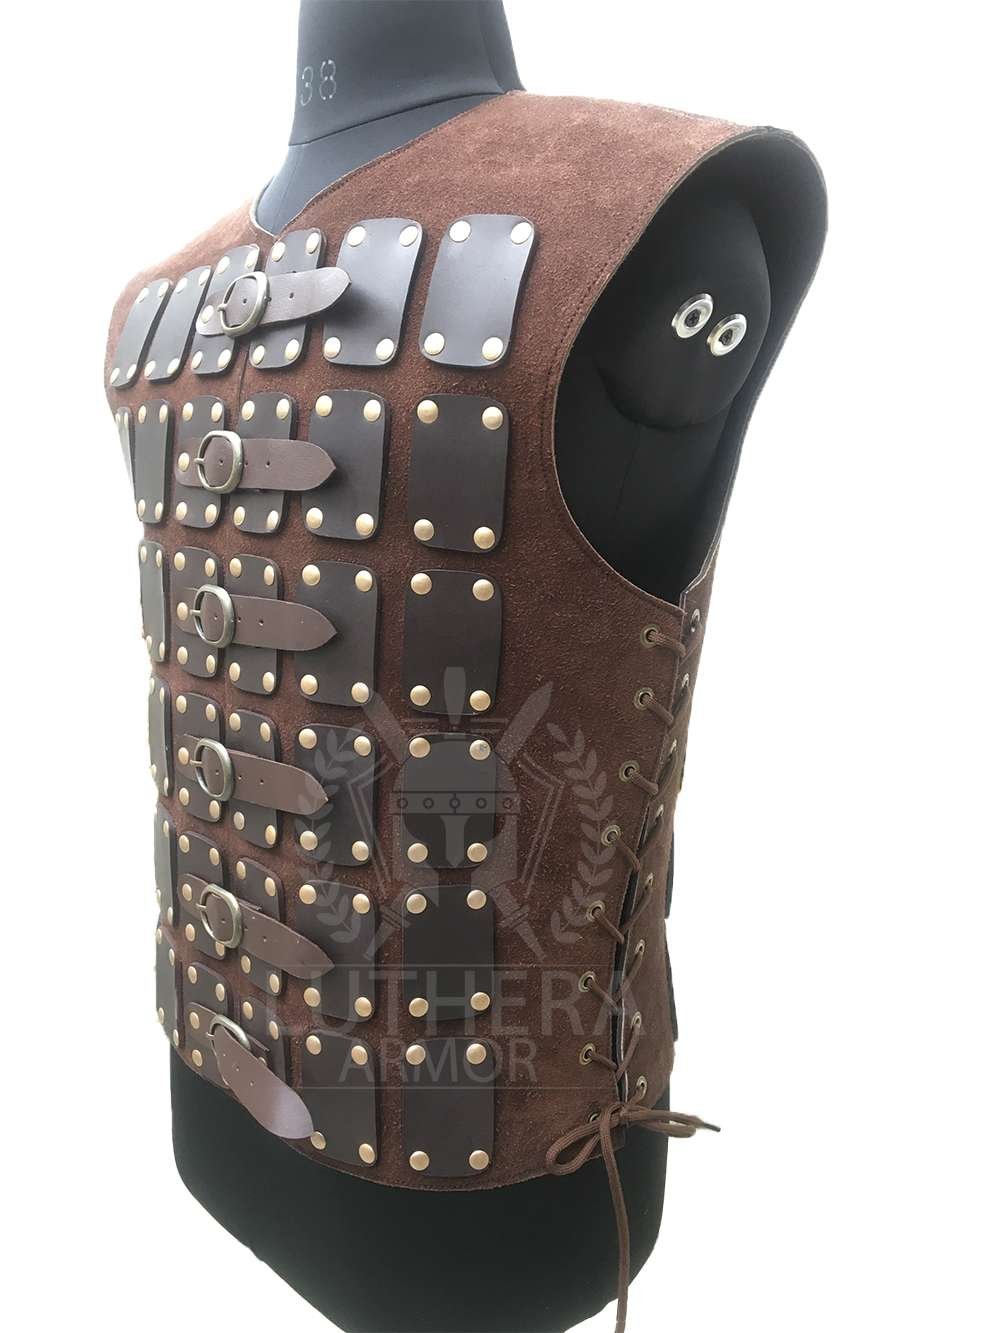 Leather Brigantine -Leather body armor - Luthera Armor